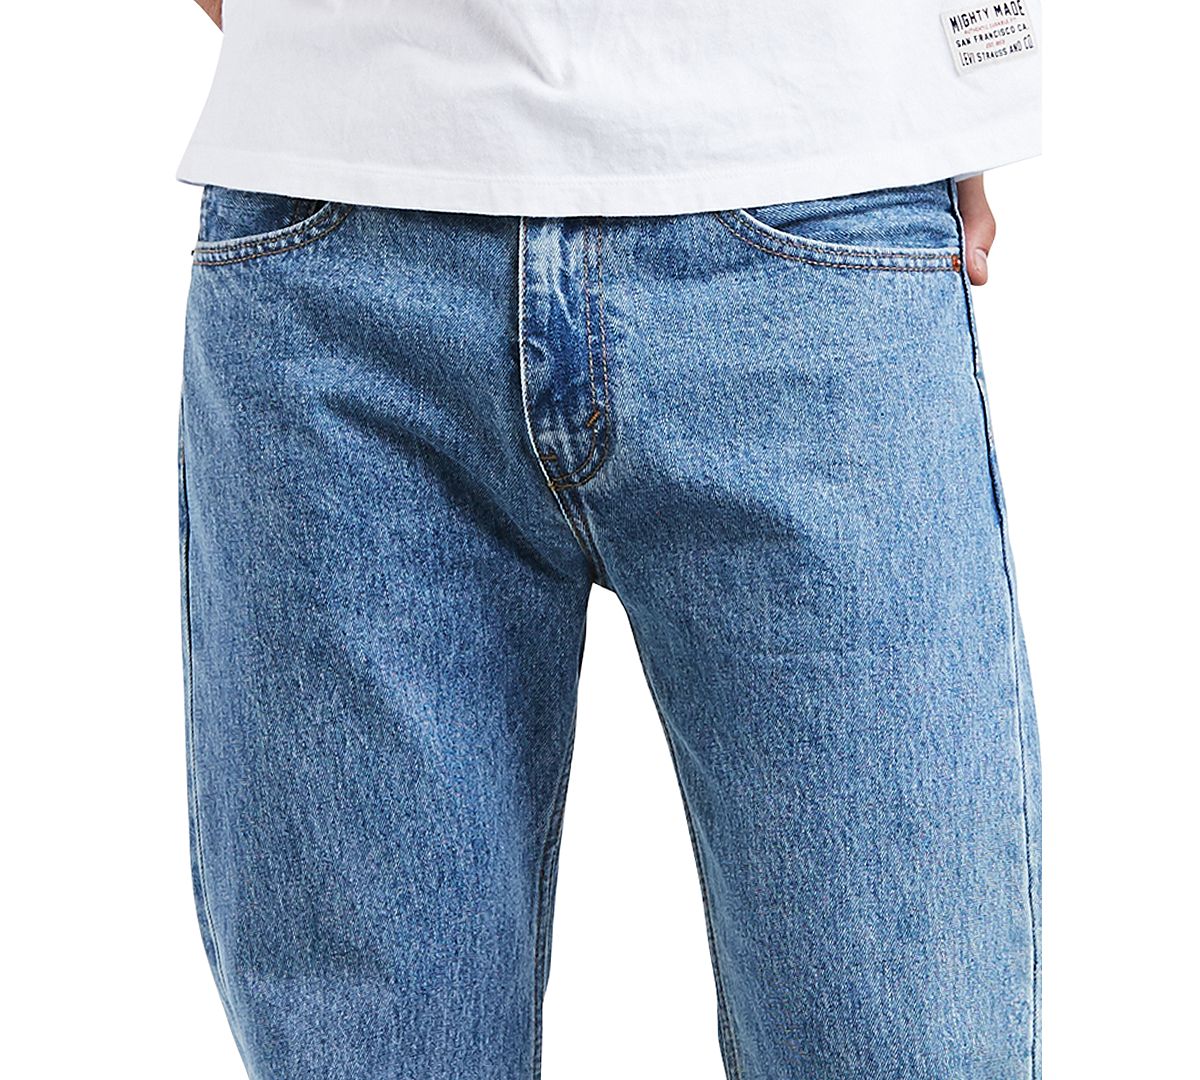 Levi's 505 Regular-fit Non-stretch Jeans Light Stonewash